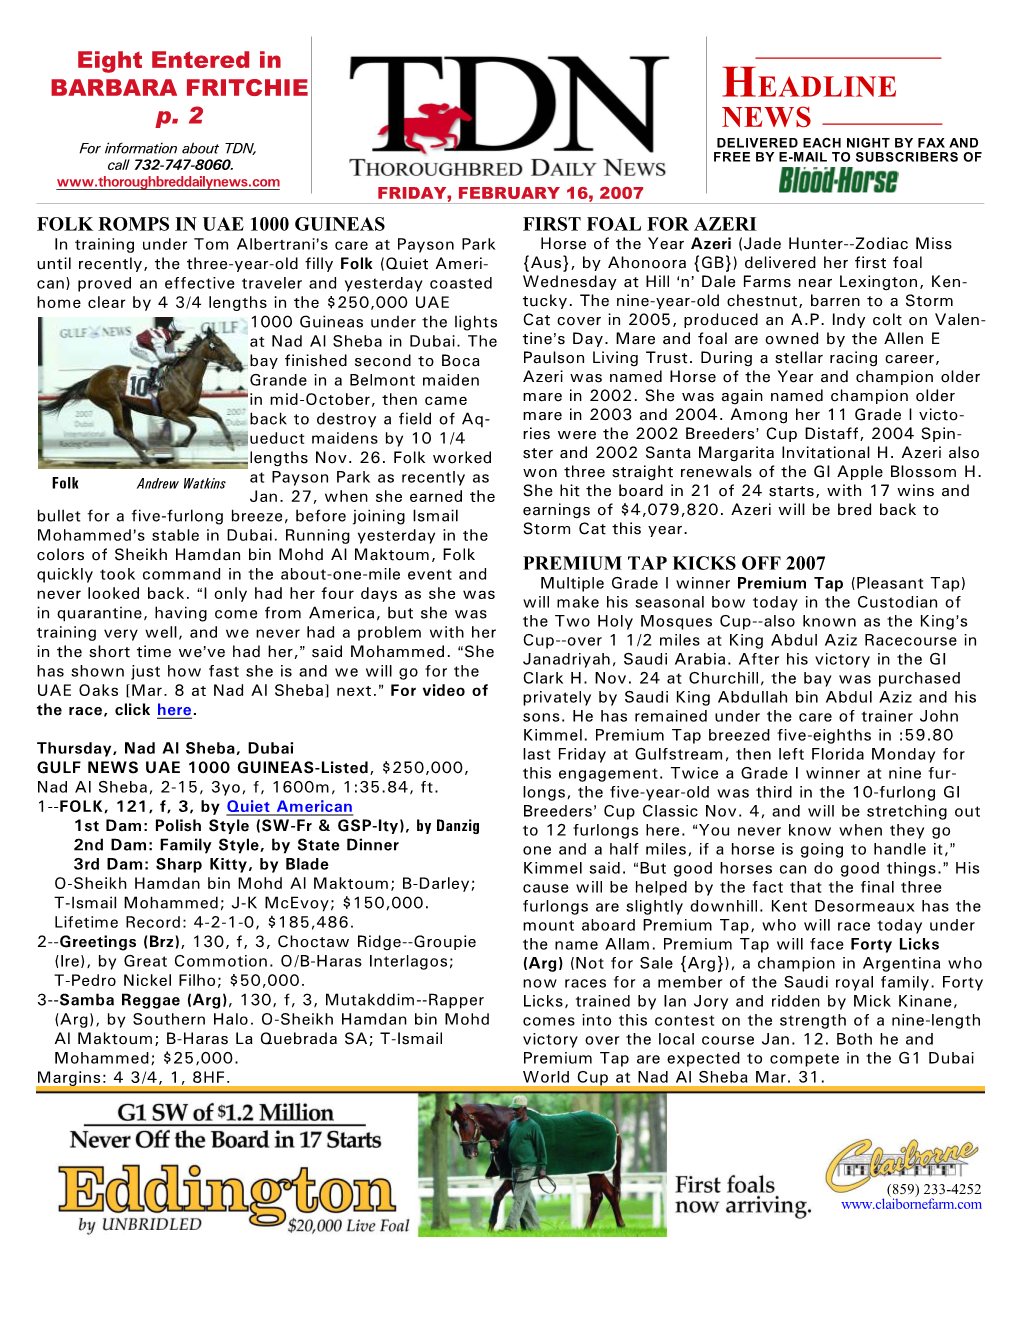 HEADLINE NEWS • 2/16/07 • PAGE 2 of 2